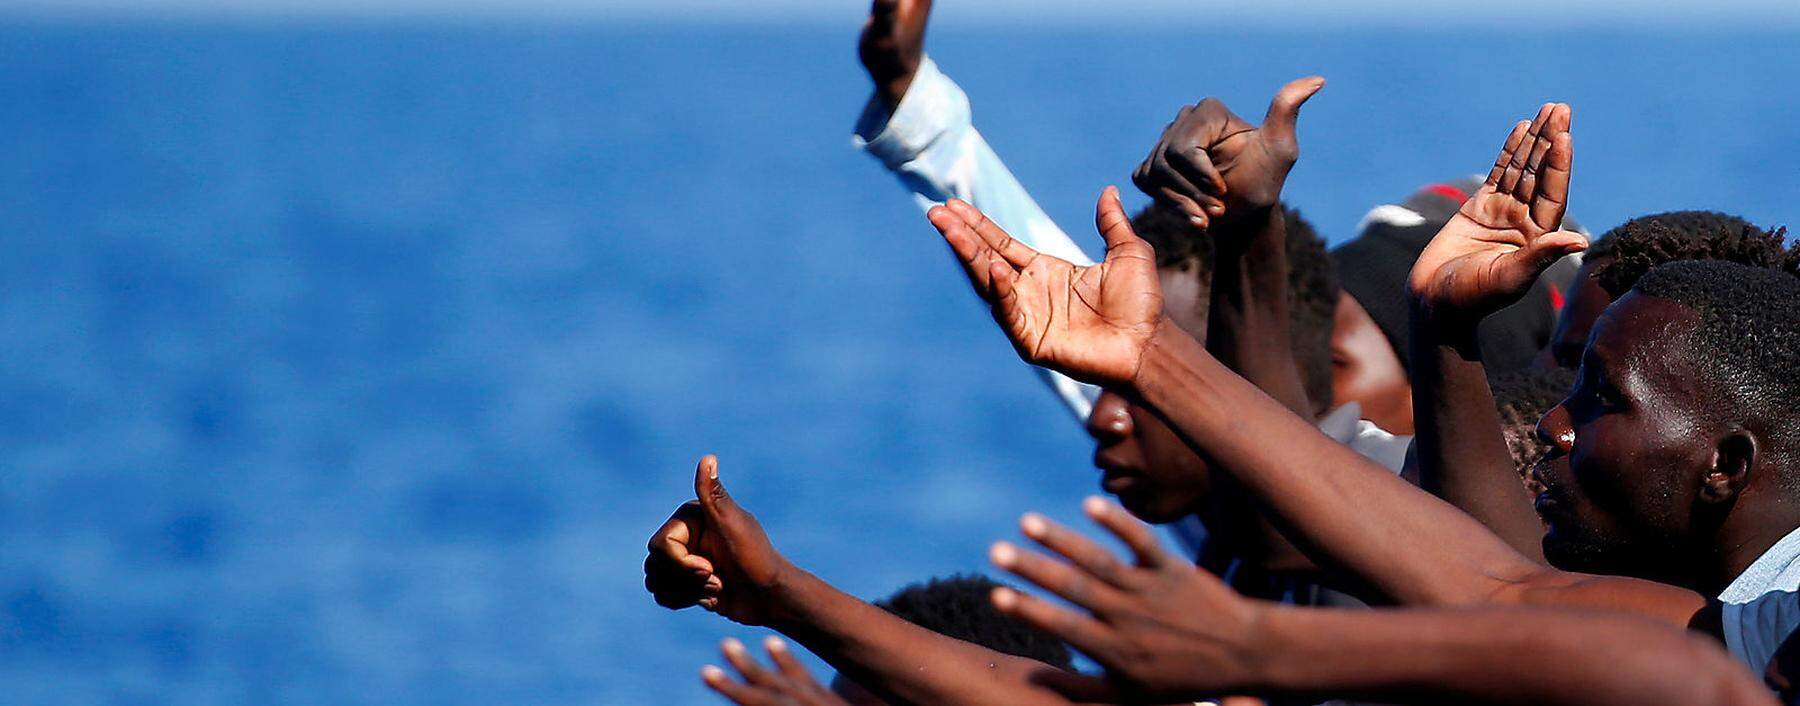 Gerettet im Mittelmeer. Flüchtlinge, die vor Libyens Küste in Seenot geraten sind, winken Helfern der NGO SOS Méditerranée.  